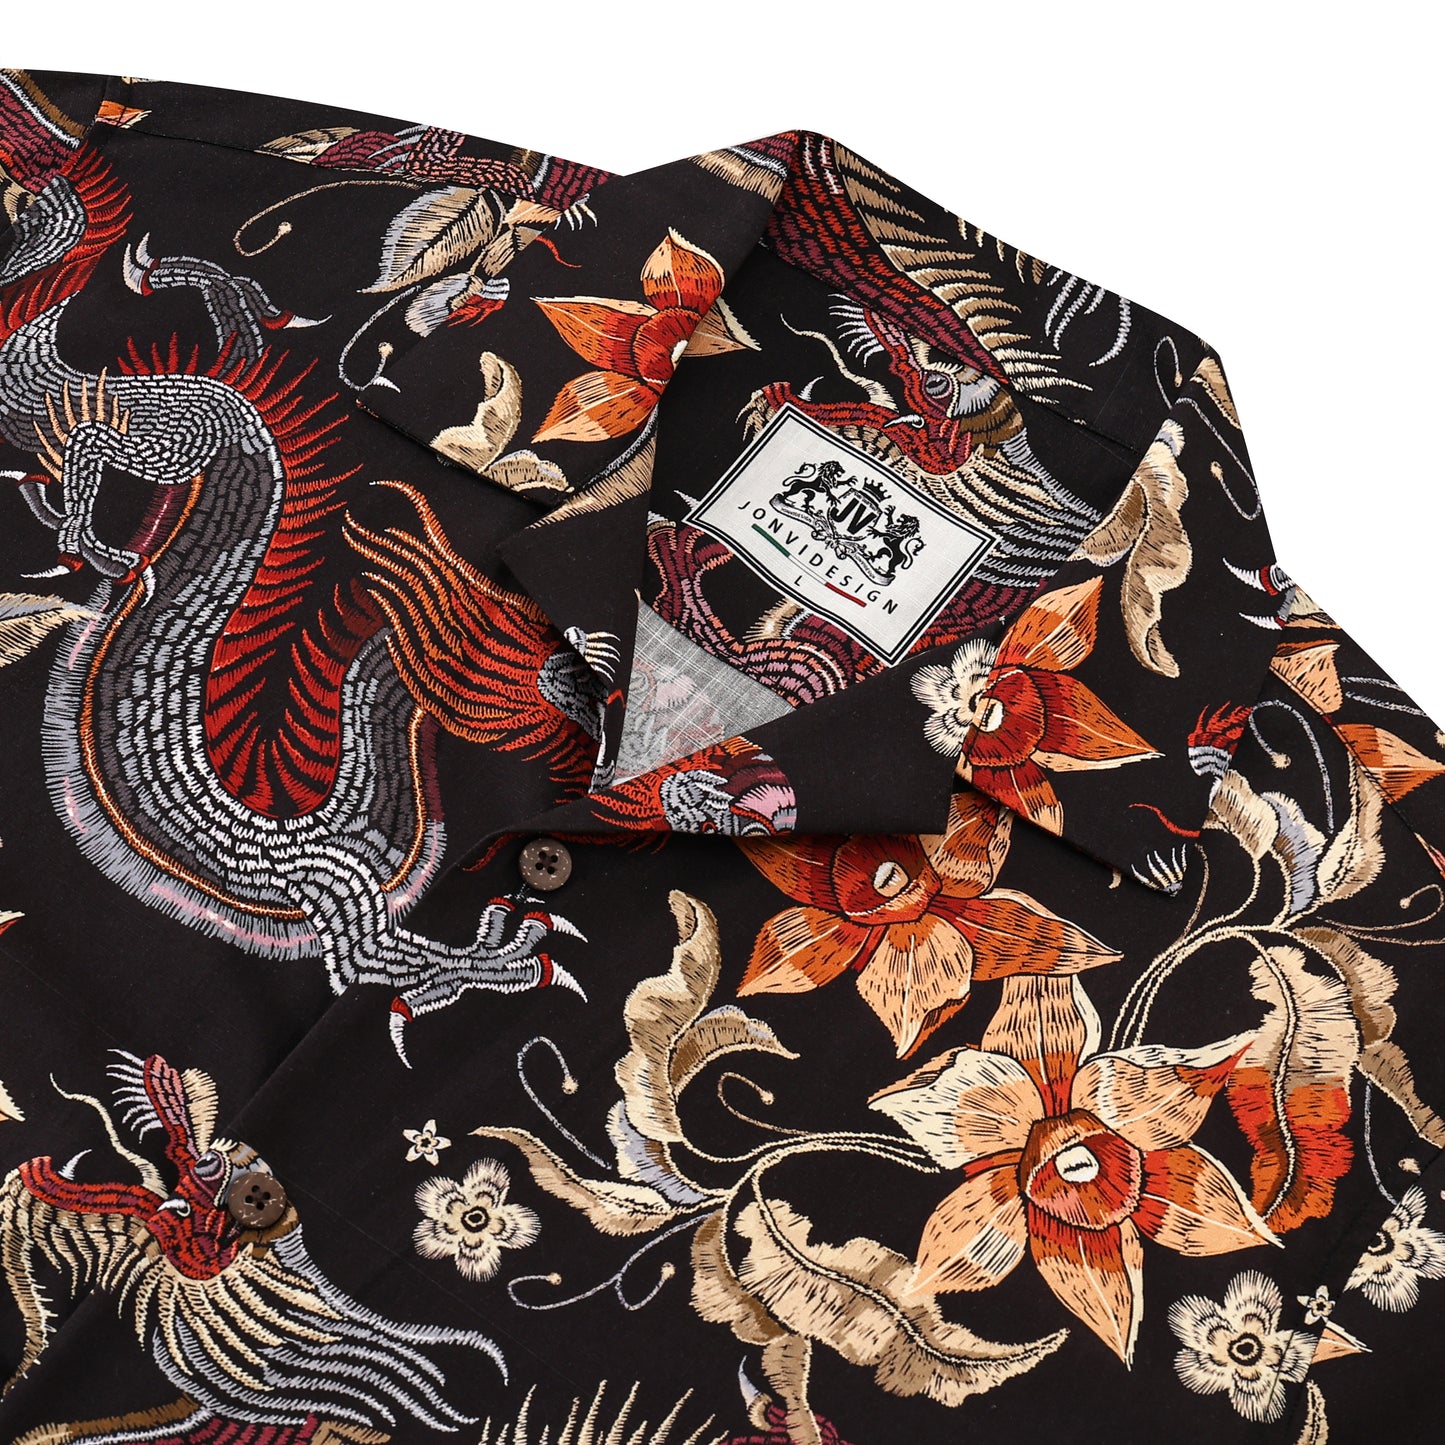 Dragon Floral Pattern Button Short Sleeve Shirt